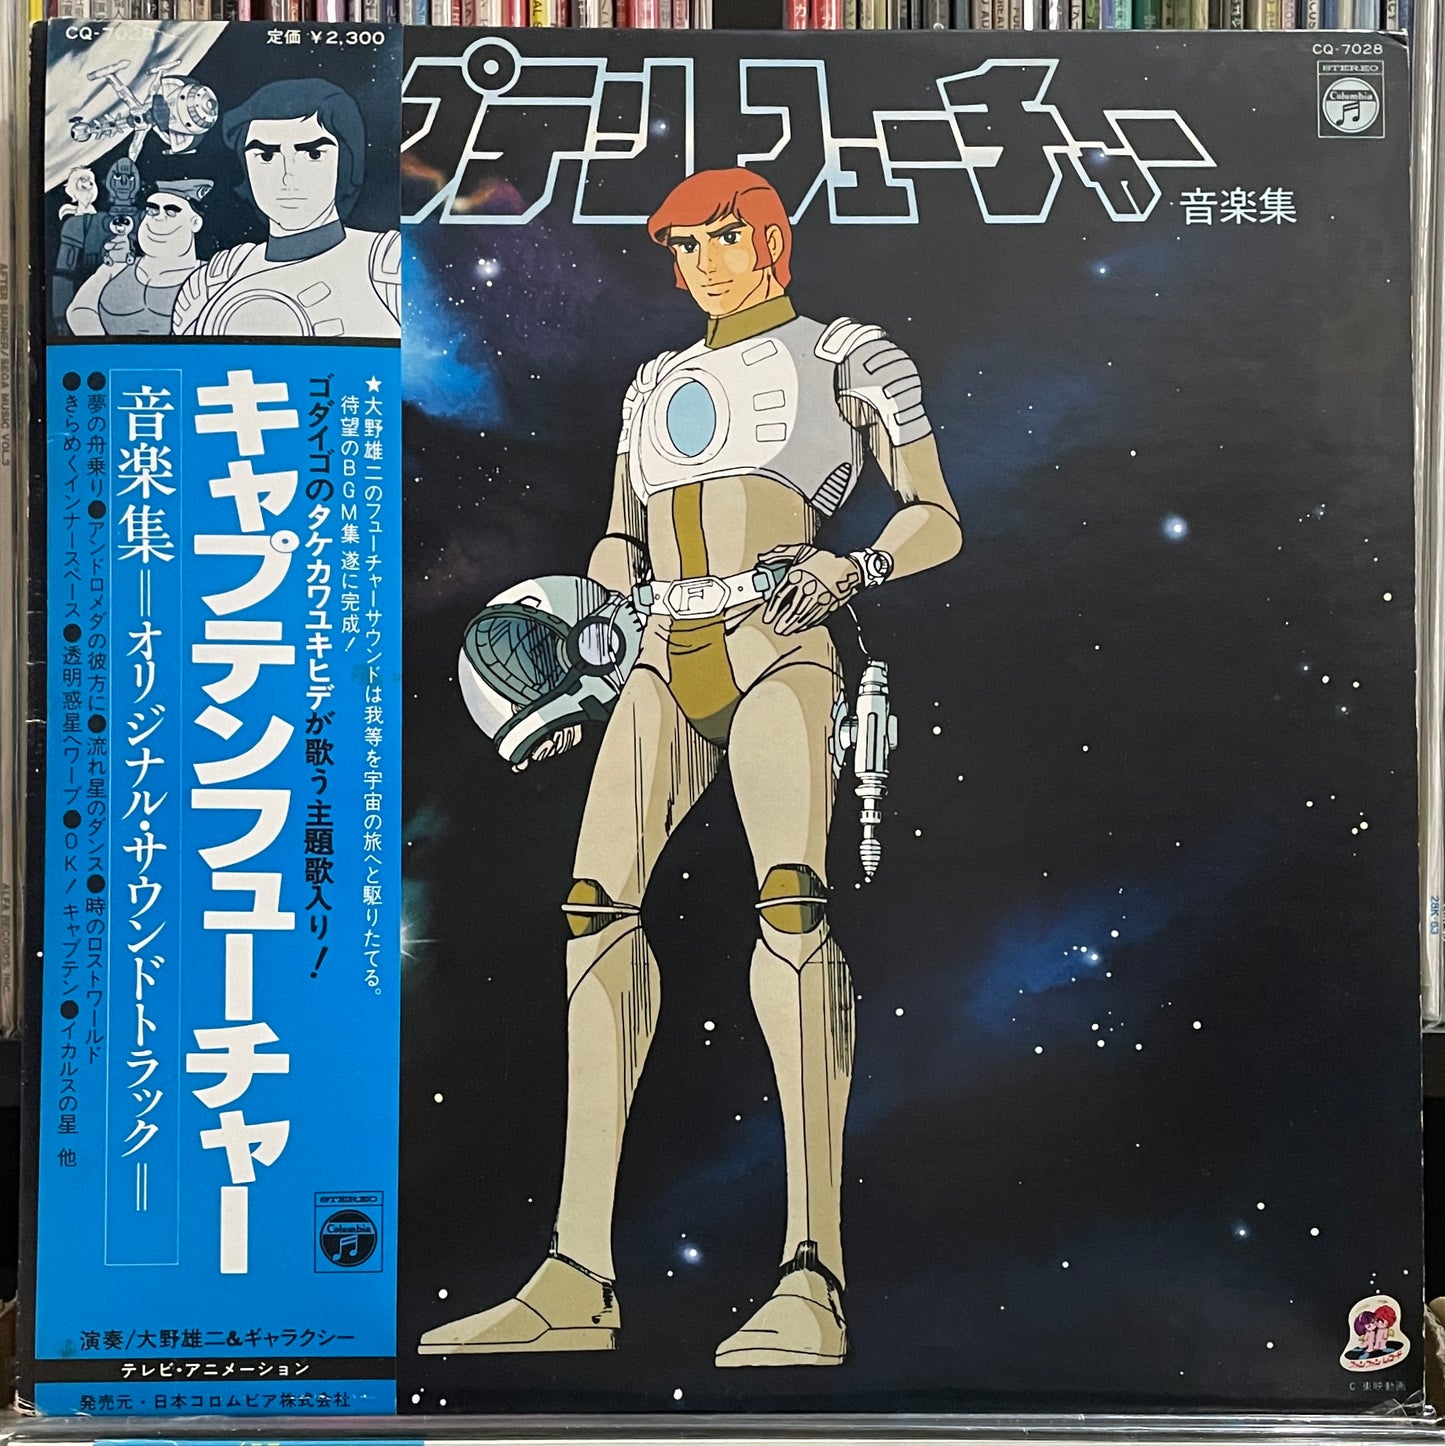 Yuji Ohno “Captain Future" (1979)